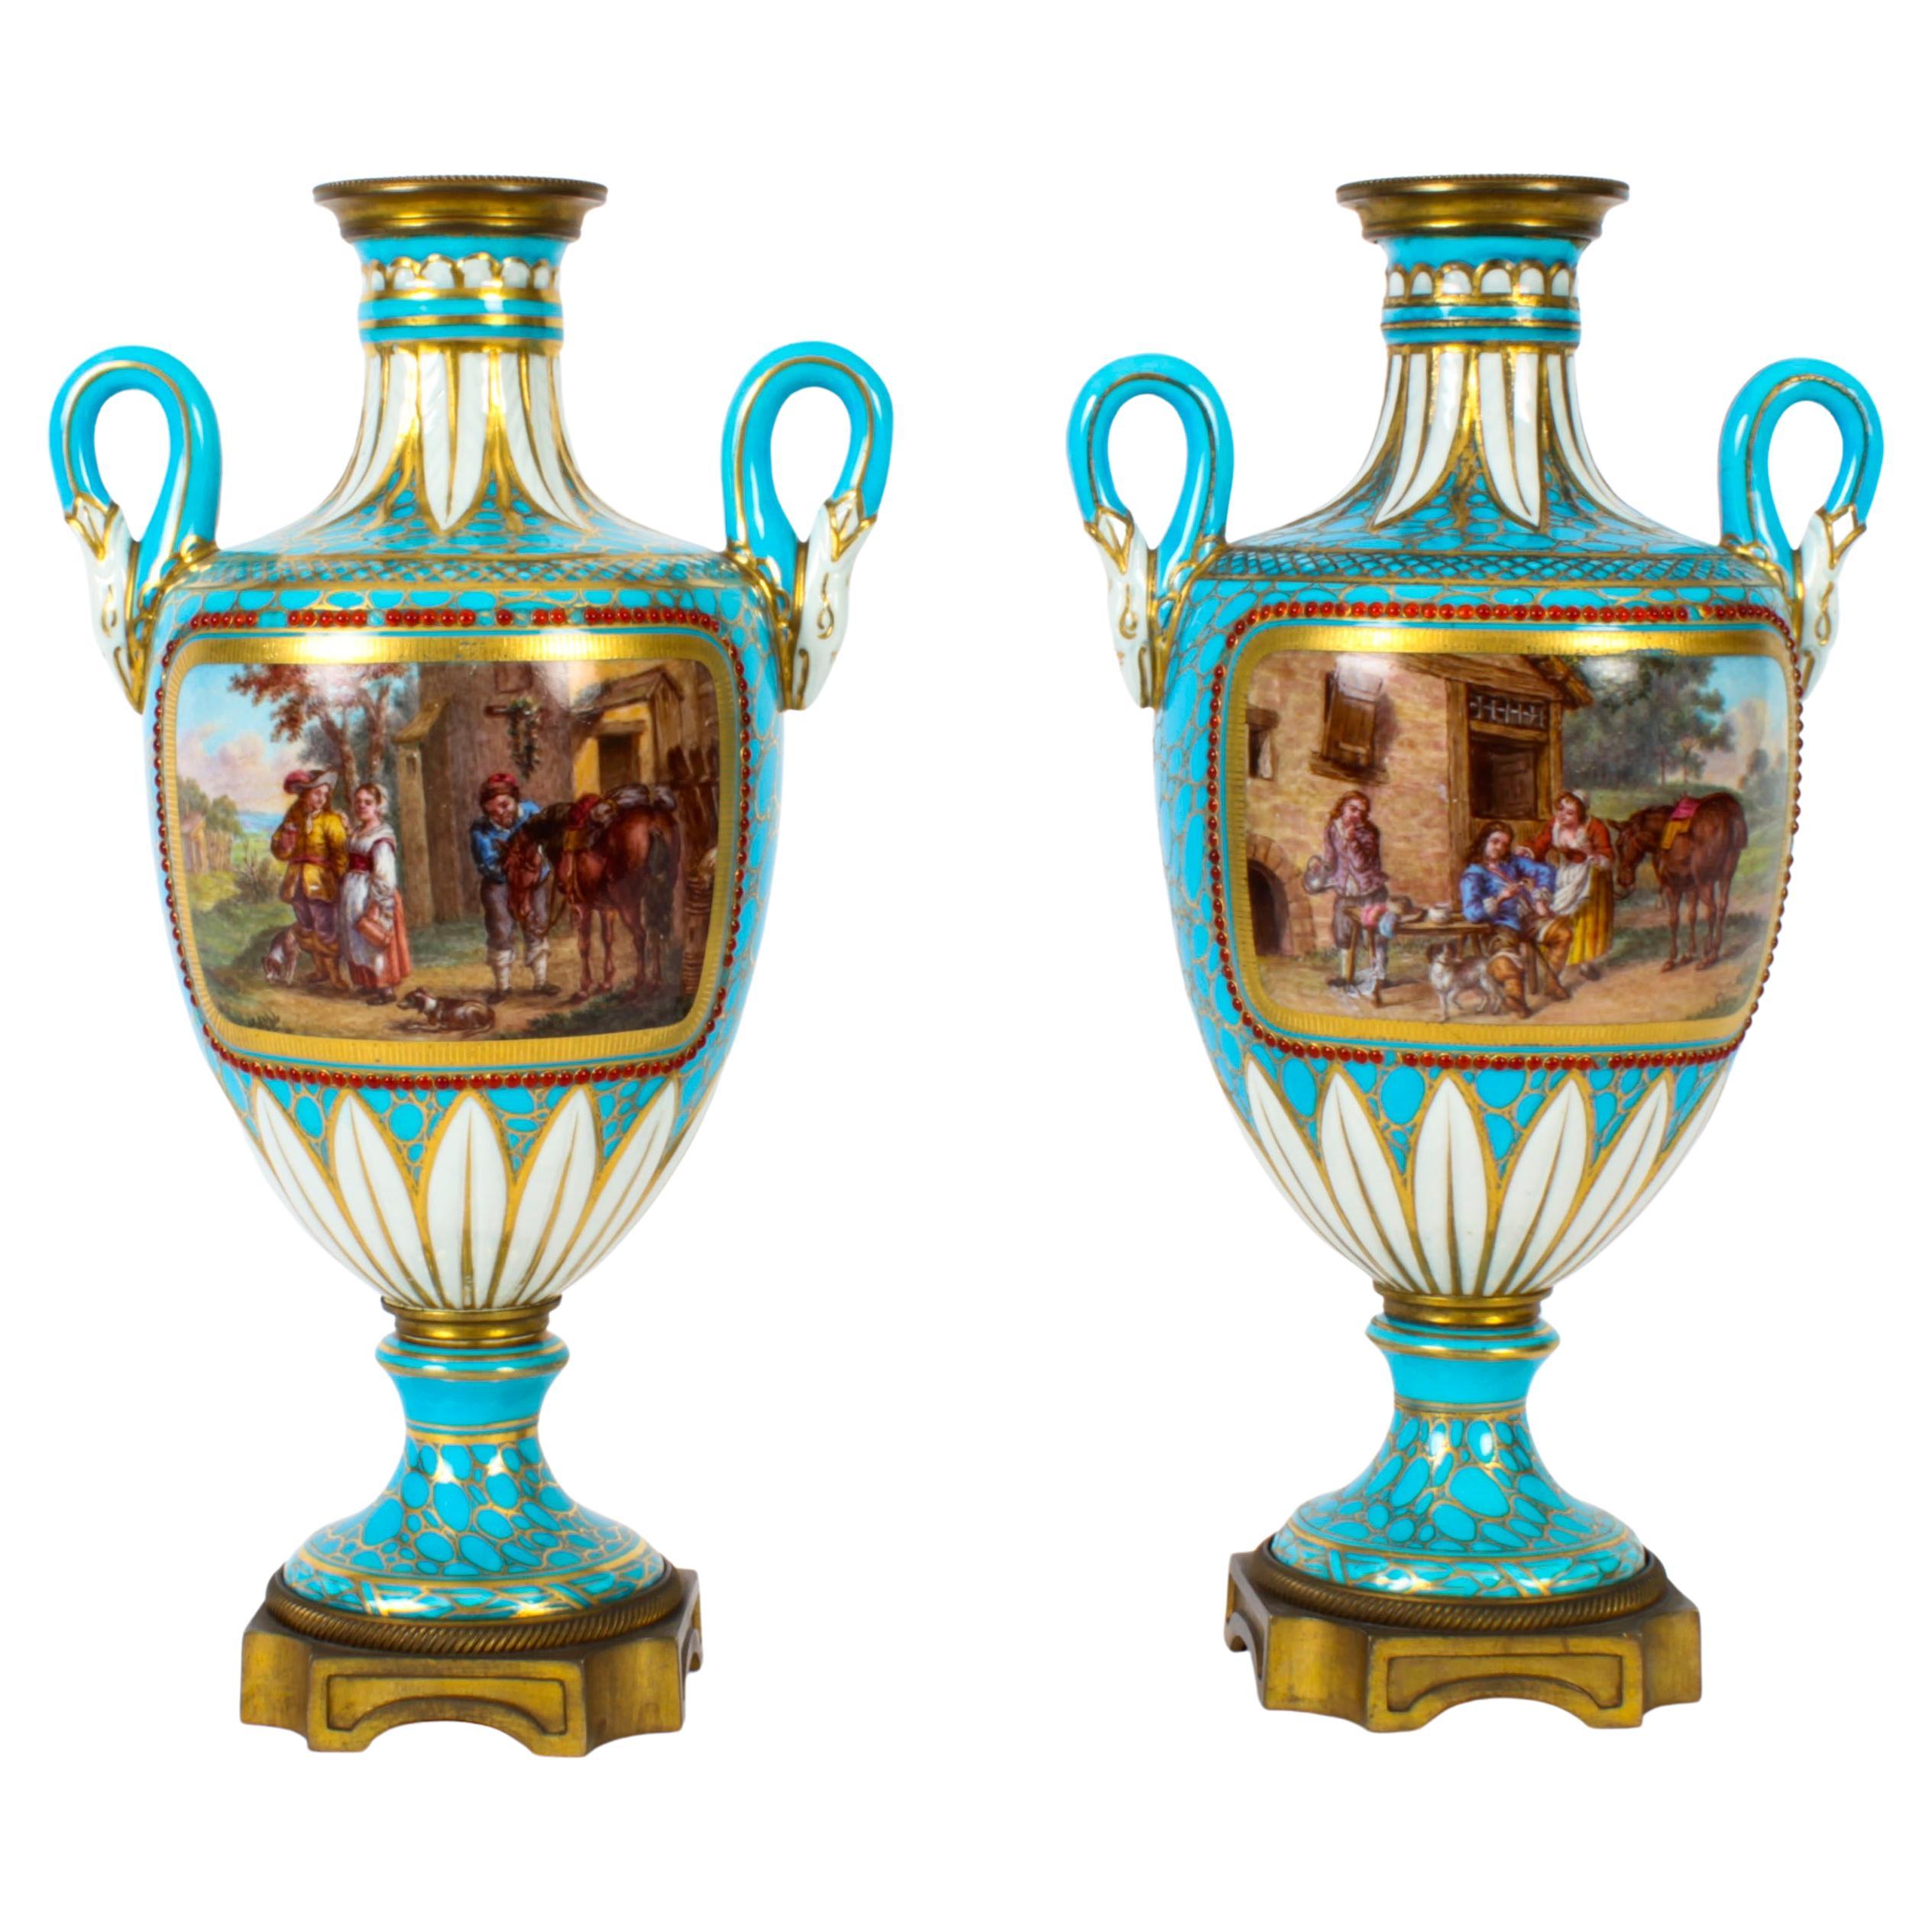 Antique Pair of French Bleu Celeste Porcelain Urns 19th Century For Sale